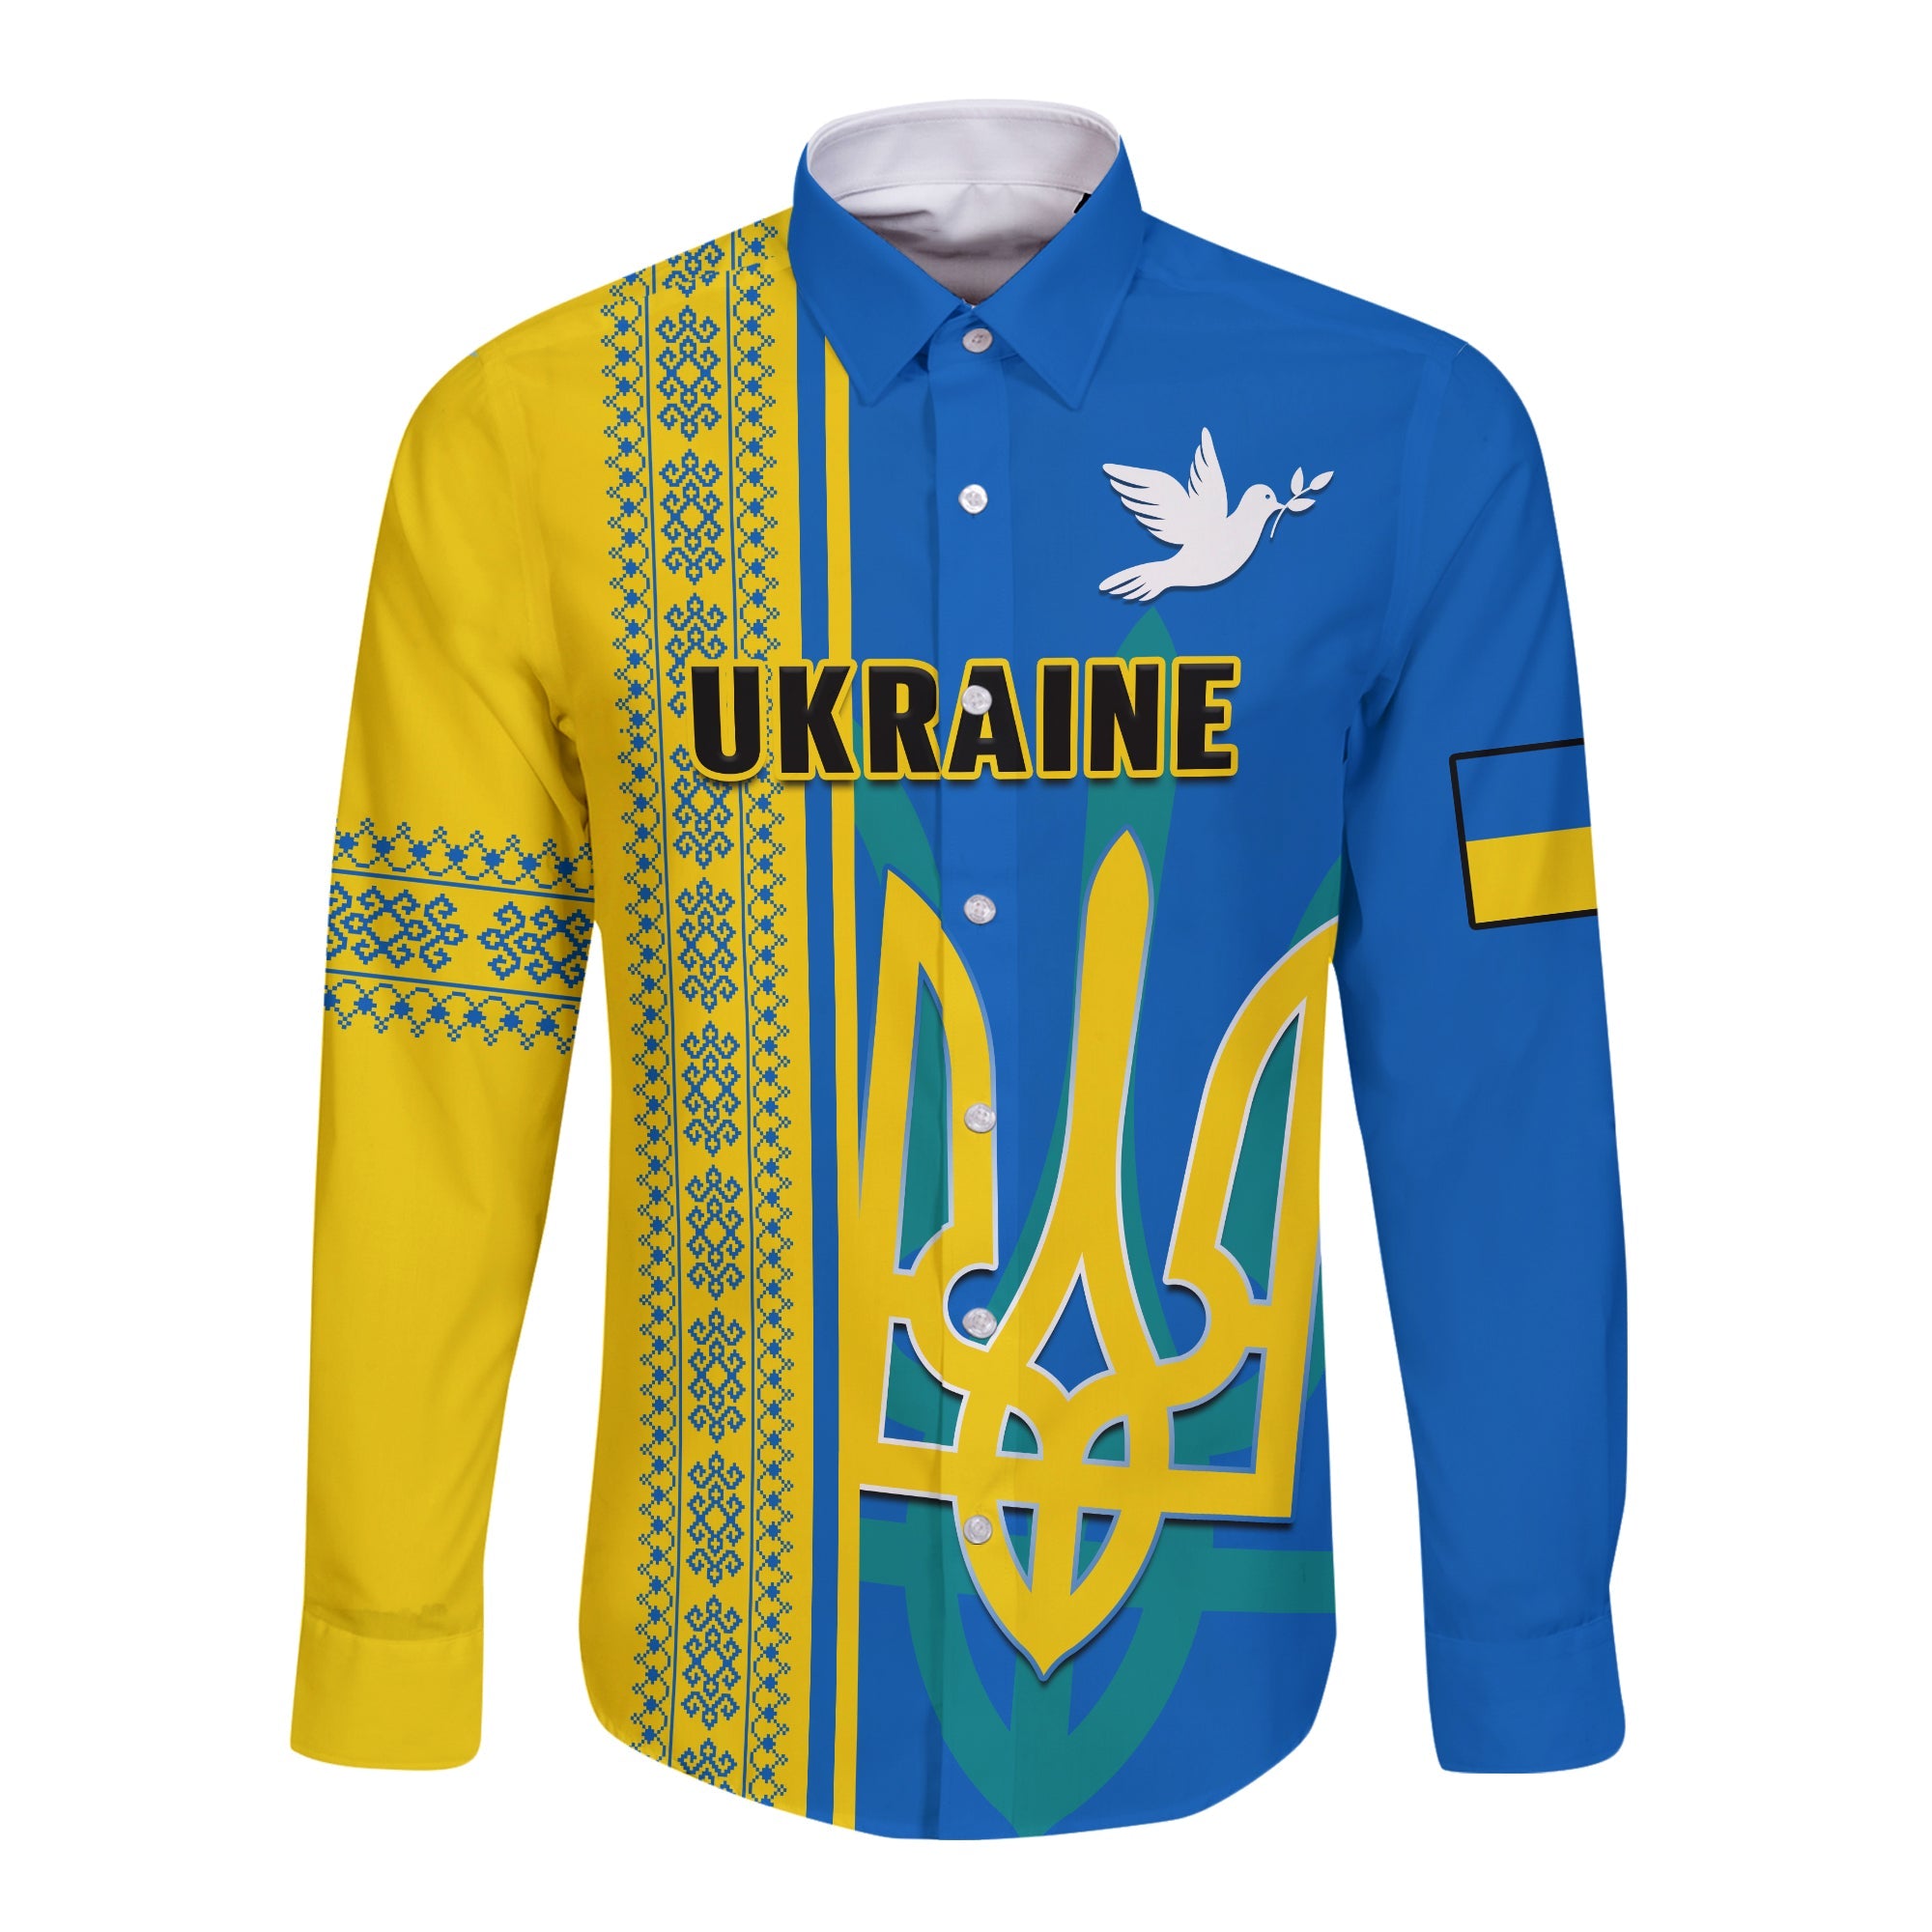 ukraine-unity-day-long-sleeve-button-shirt-vyshyvanka-ukrainian-coat-of-arms